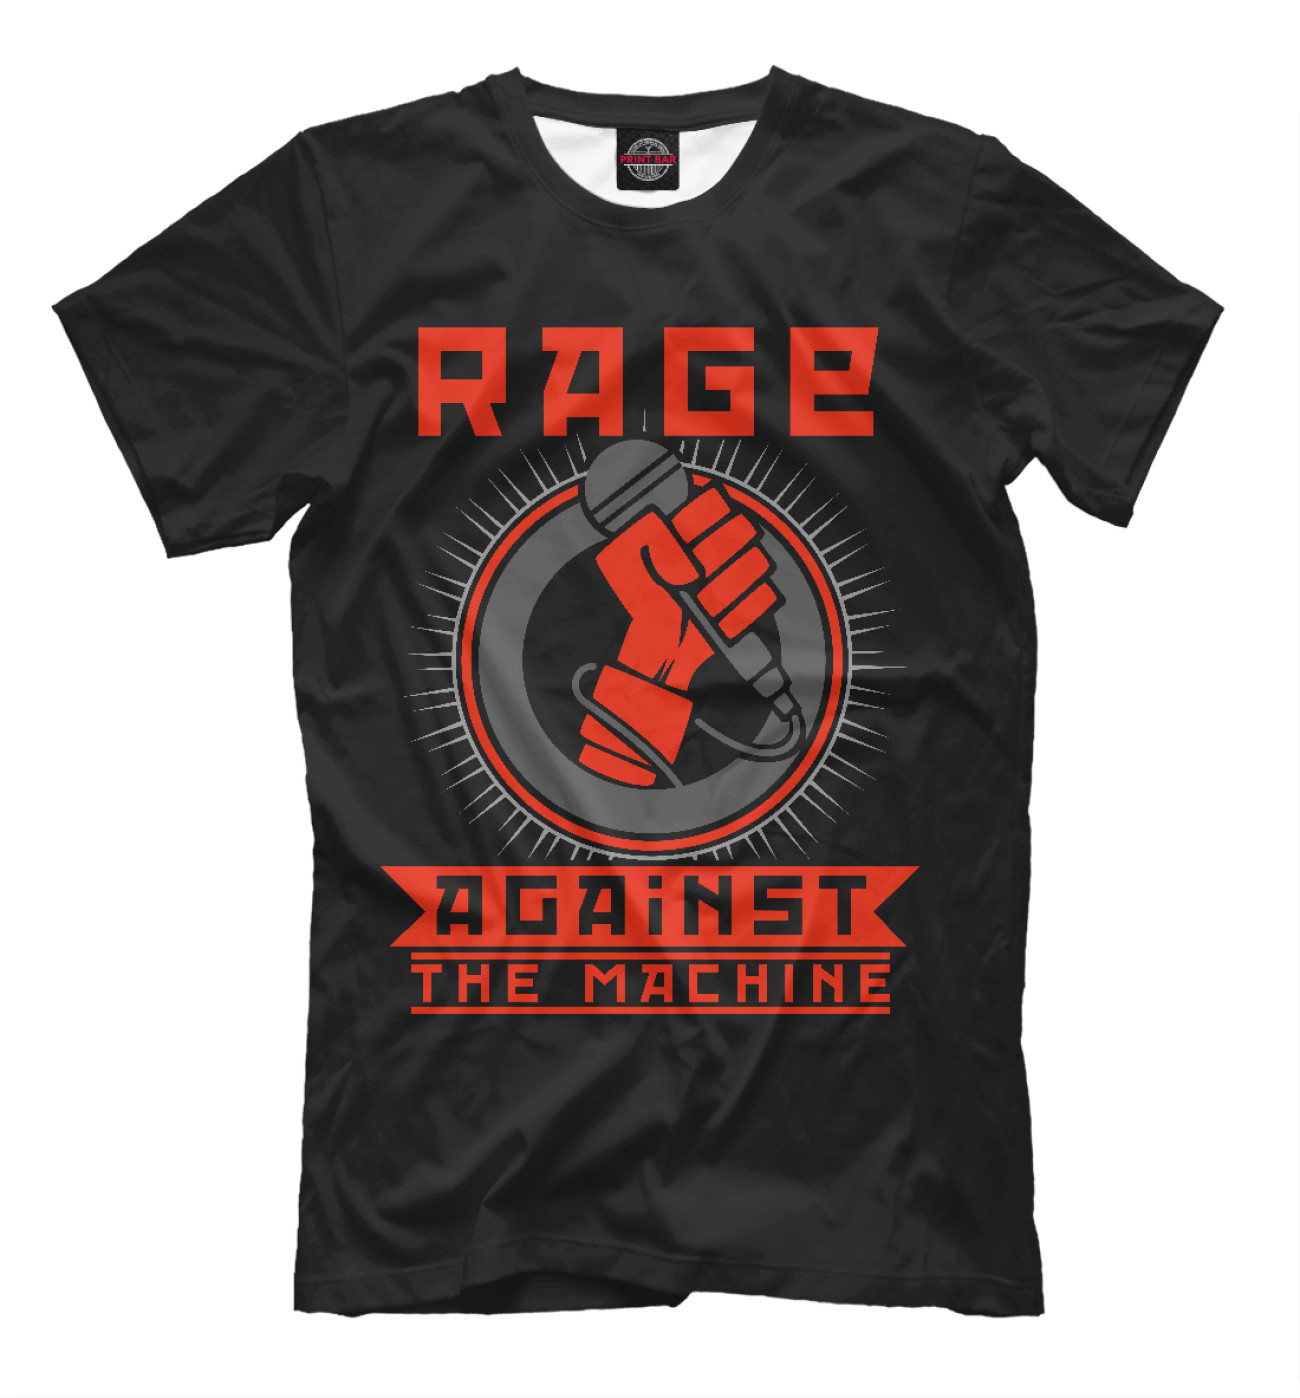 Мужская Футболка Rage Against the Machine, артикул: RAM-356963-fut-2